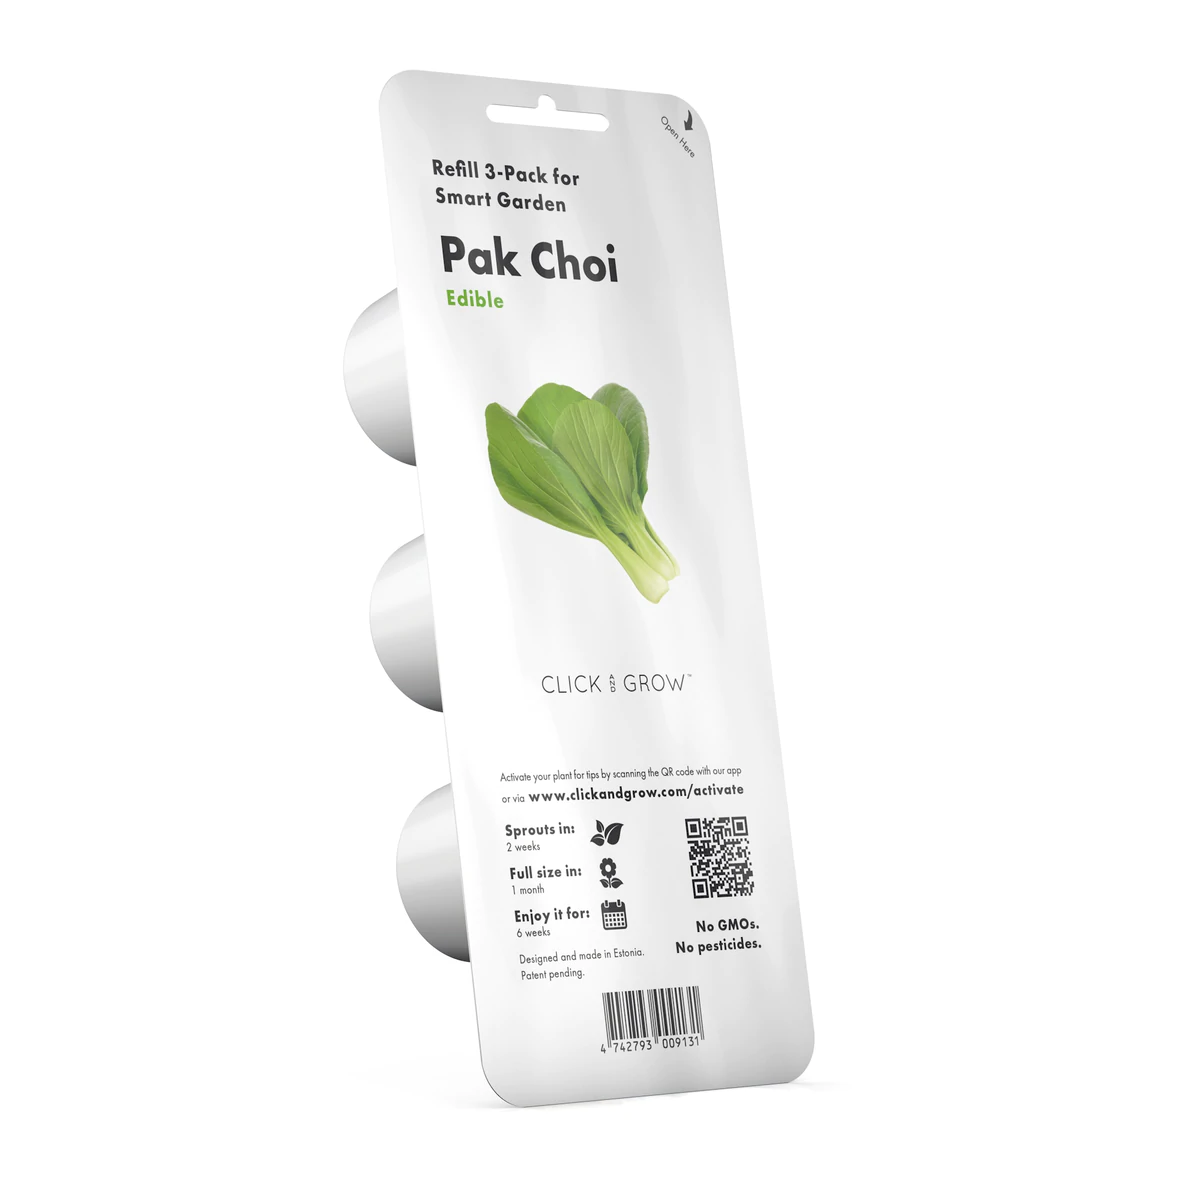 Pak Choi Plant Pods for Smart Garden